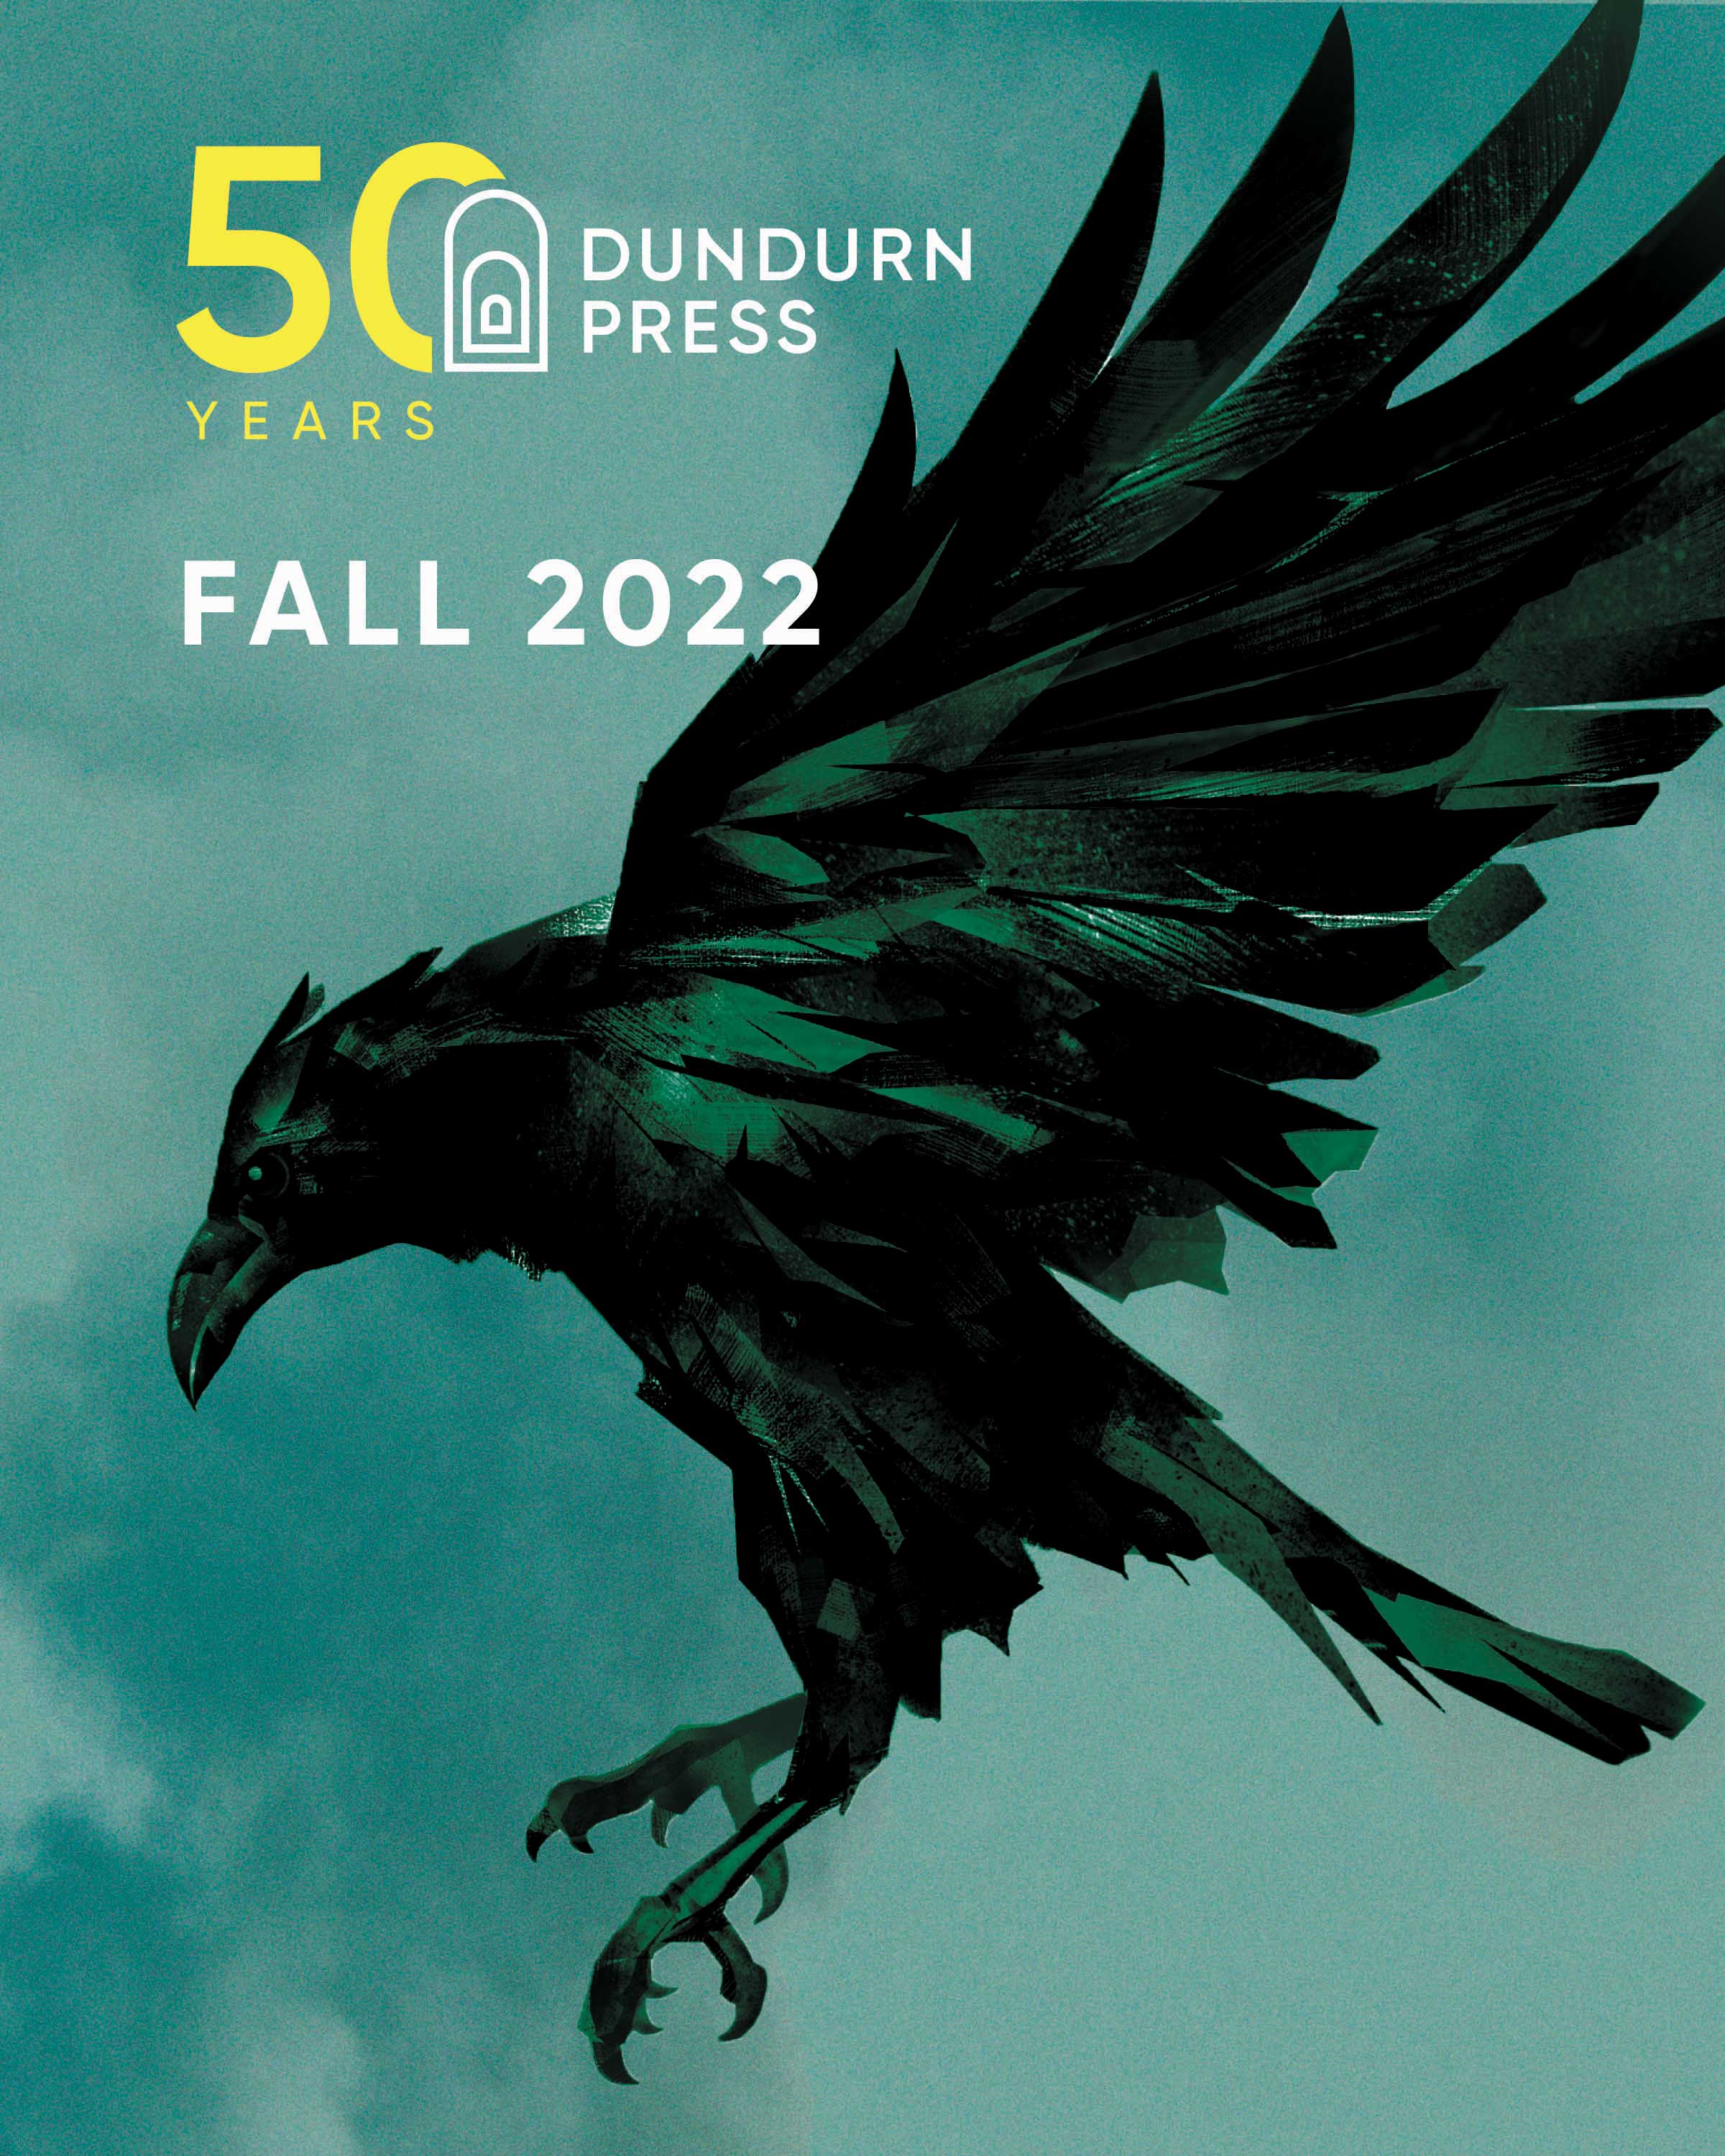 Download the Dundurn Press Fall 2022 Catalogue